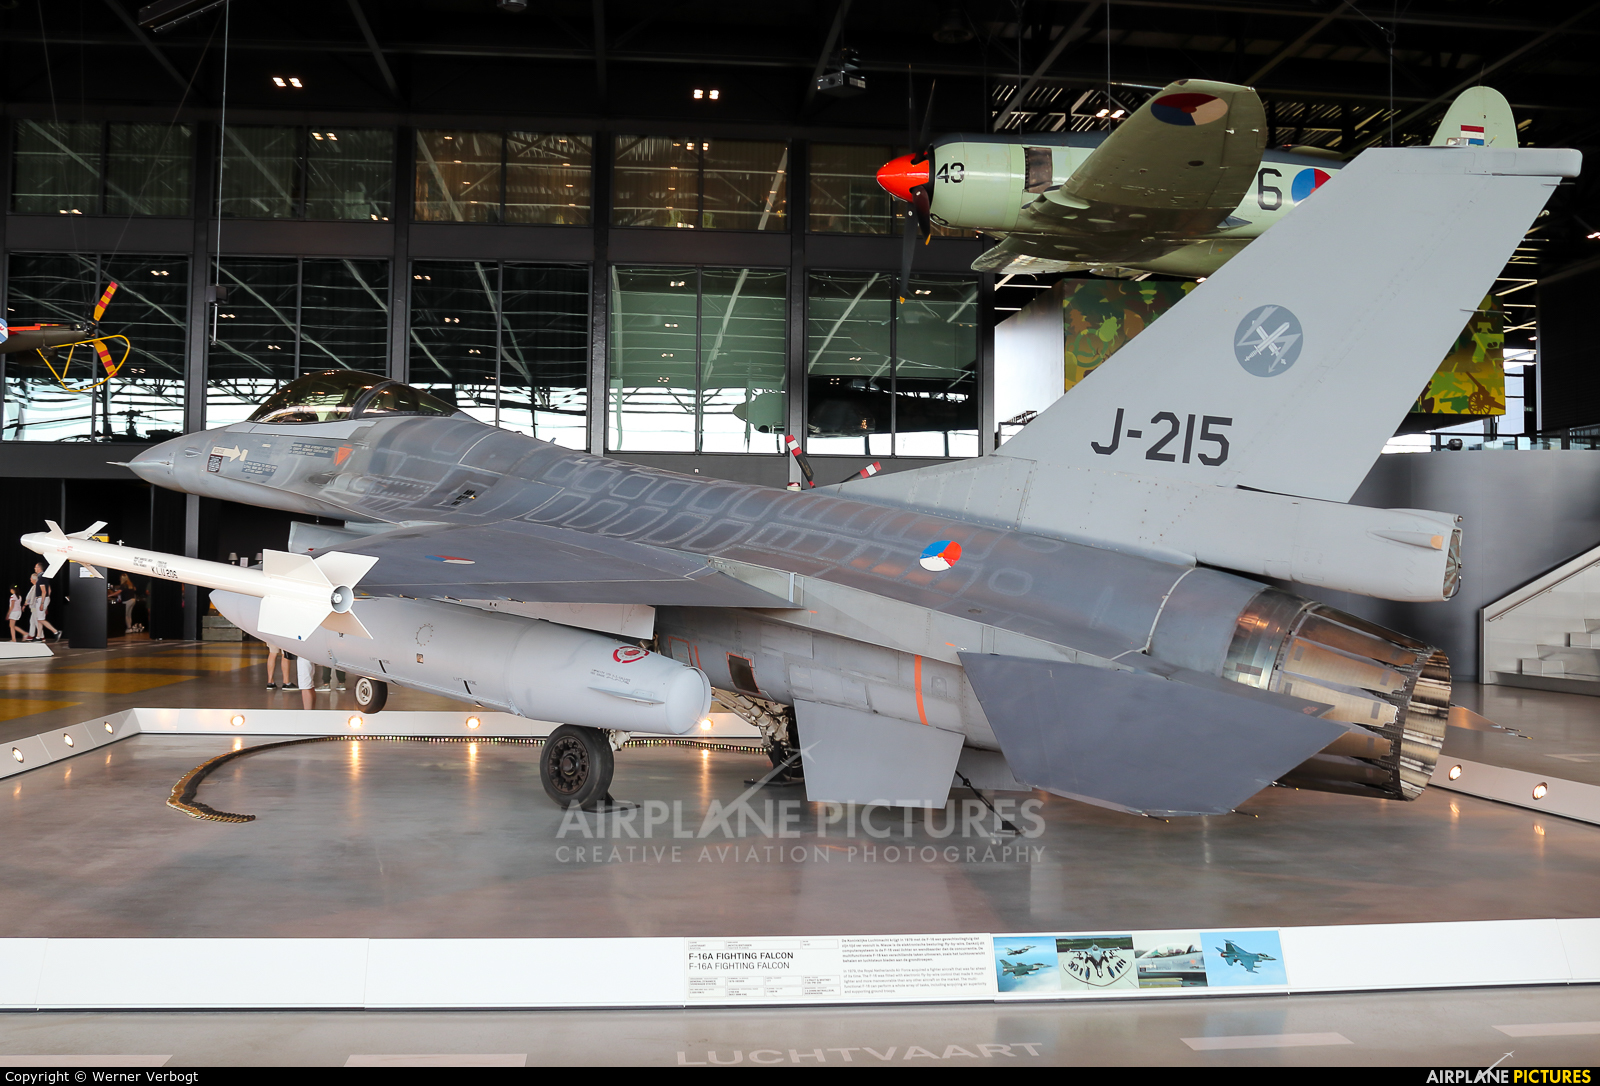 Netherlands - Air Force J-215 aircraft at Soesterberg - Nationaal Militair Museum